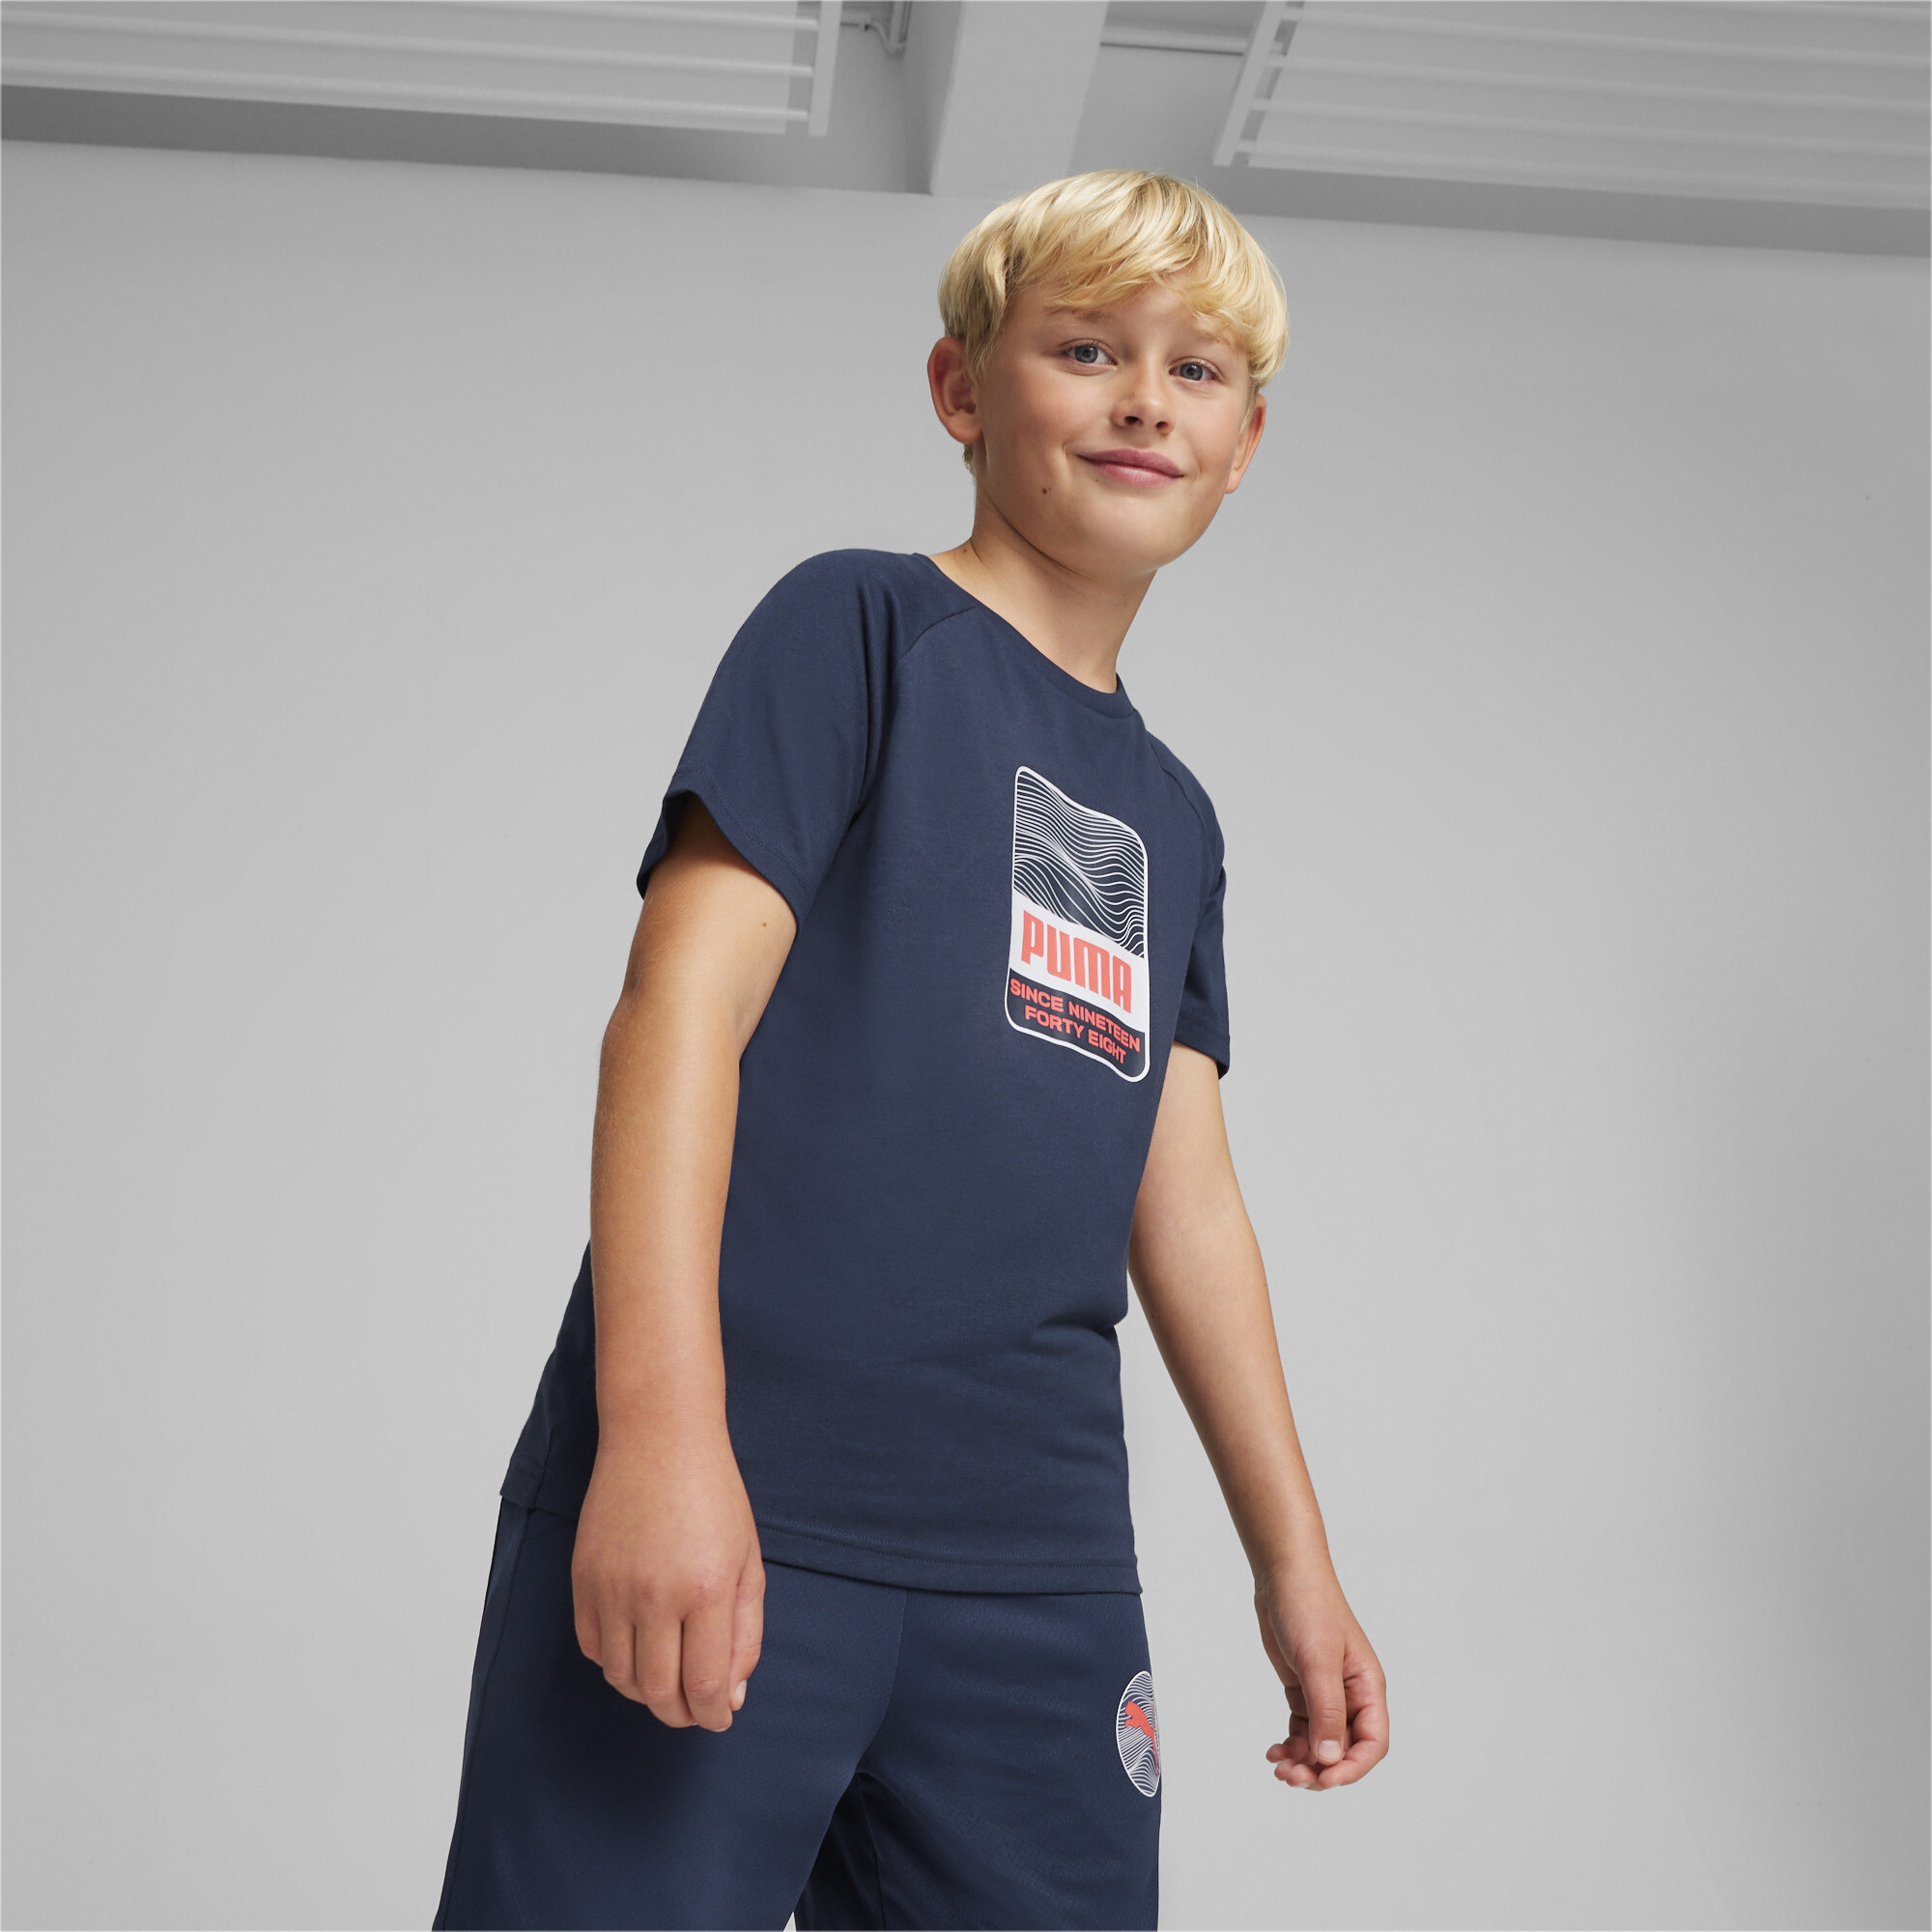 Men's Puma ACTIVE SPORTS Youth Graphic T-Shirt, Blue, Size 5-6Y, Shop